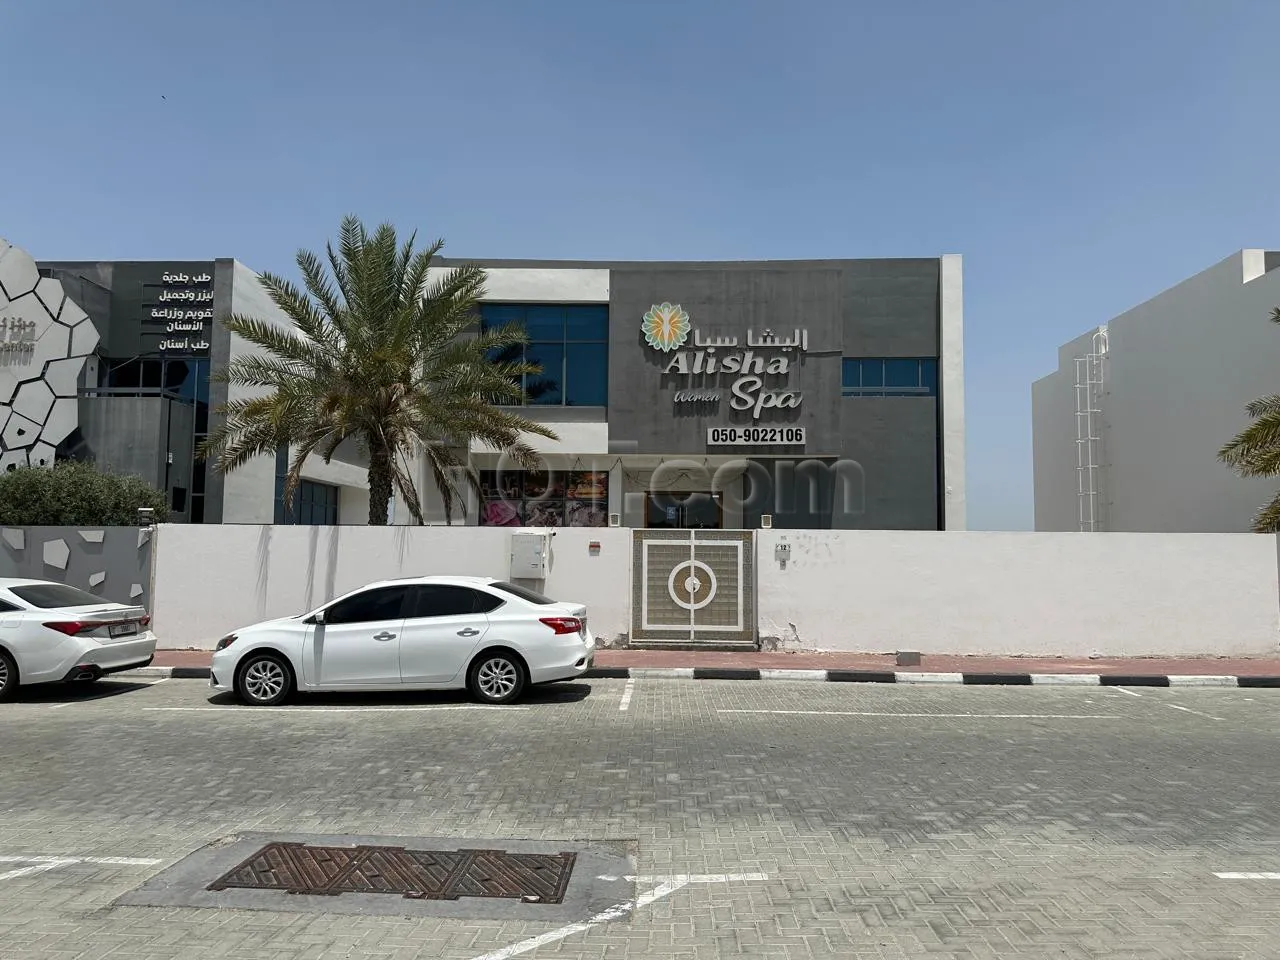 Ajman City, United Arab Emirates Alisha Spa Massage